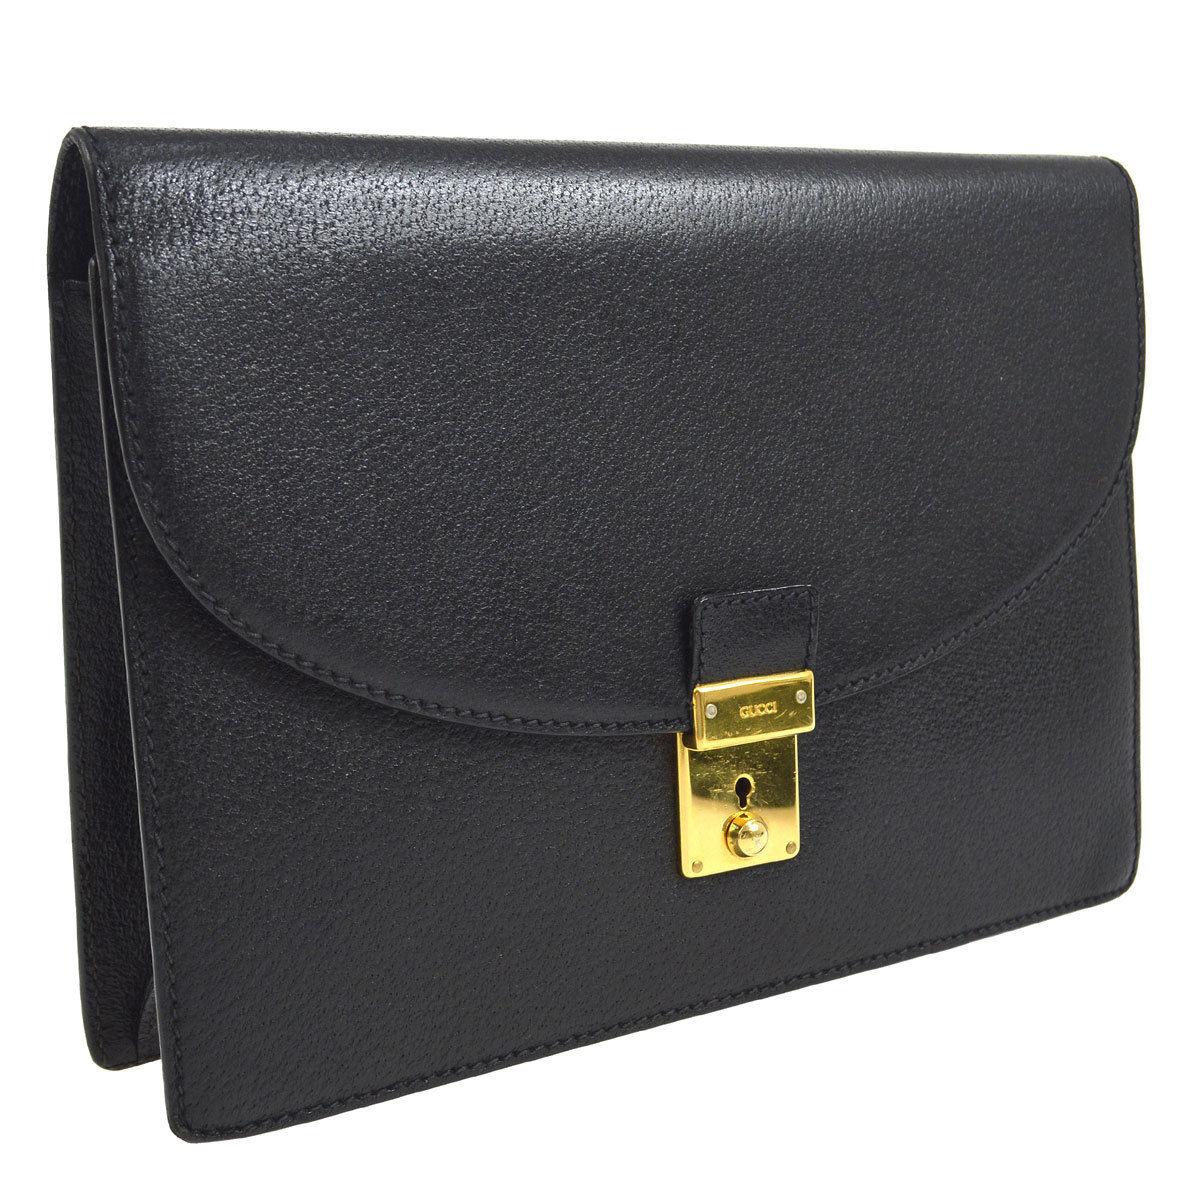 Gucci Black Leather Envelope Flip Lock Evening Clutch Wristlet Flap Bag